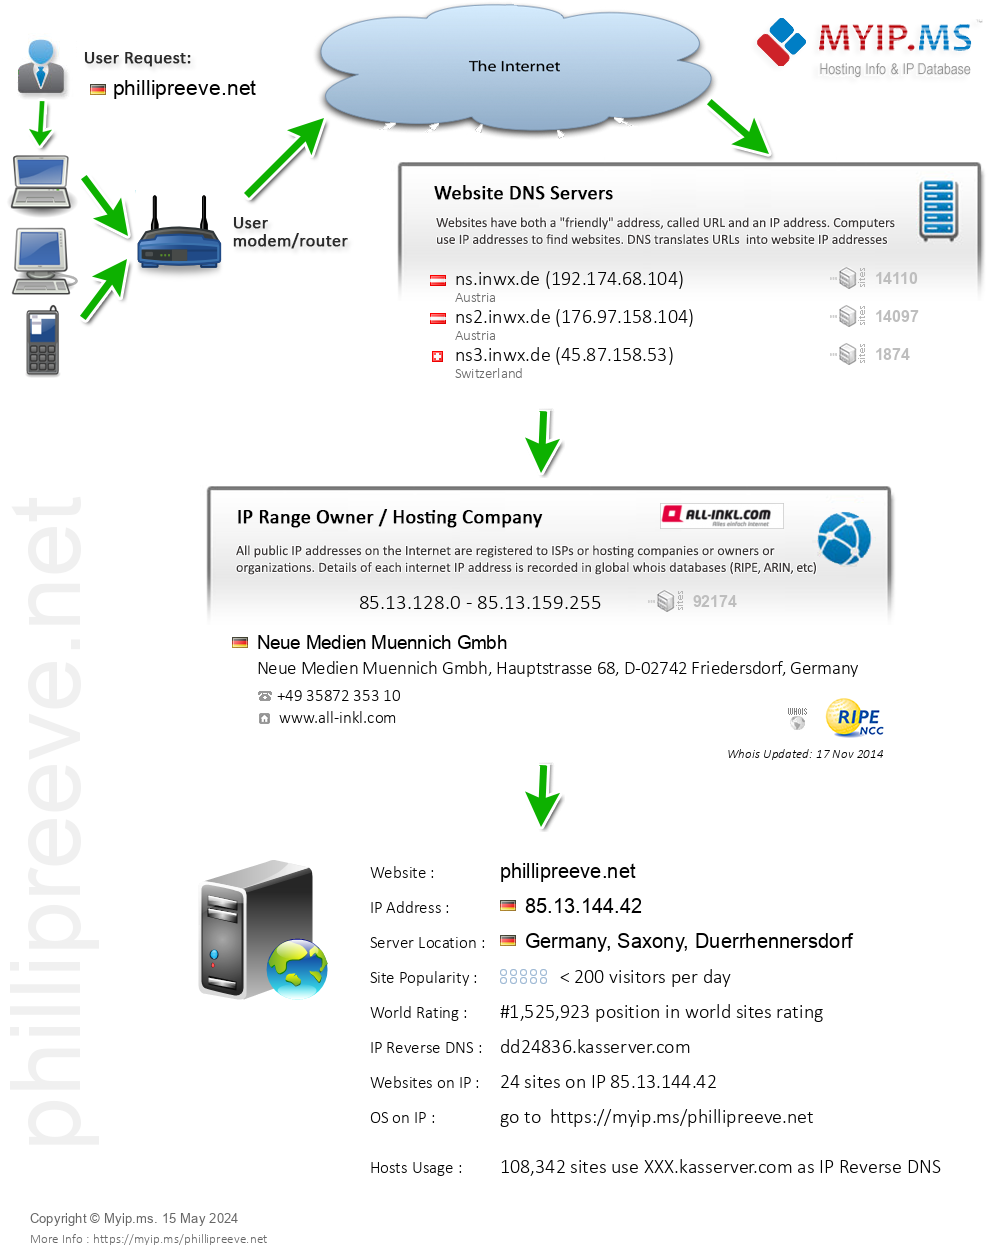 Phillipreeve.net - Website Hosting Visual IP Diagram